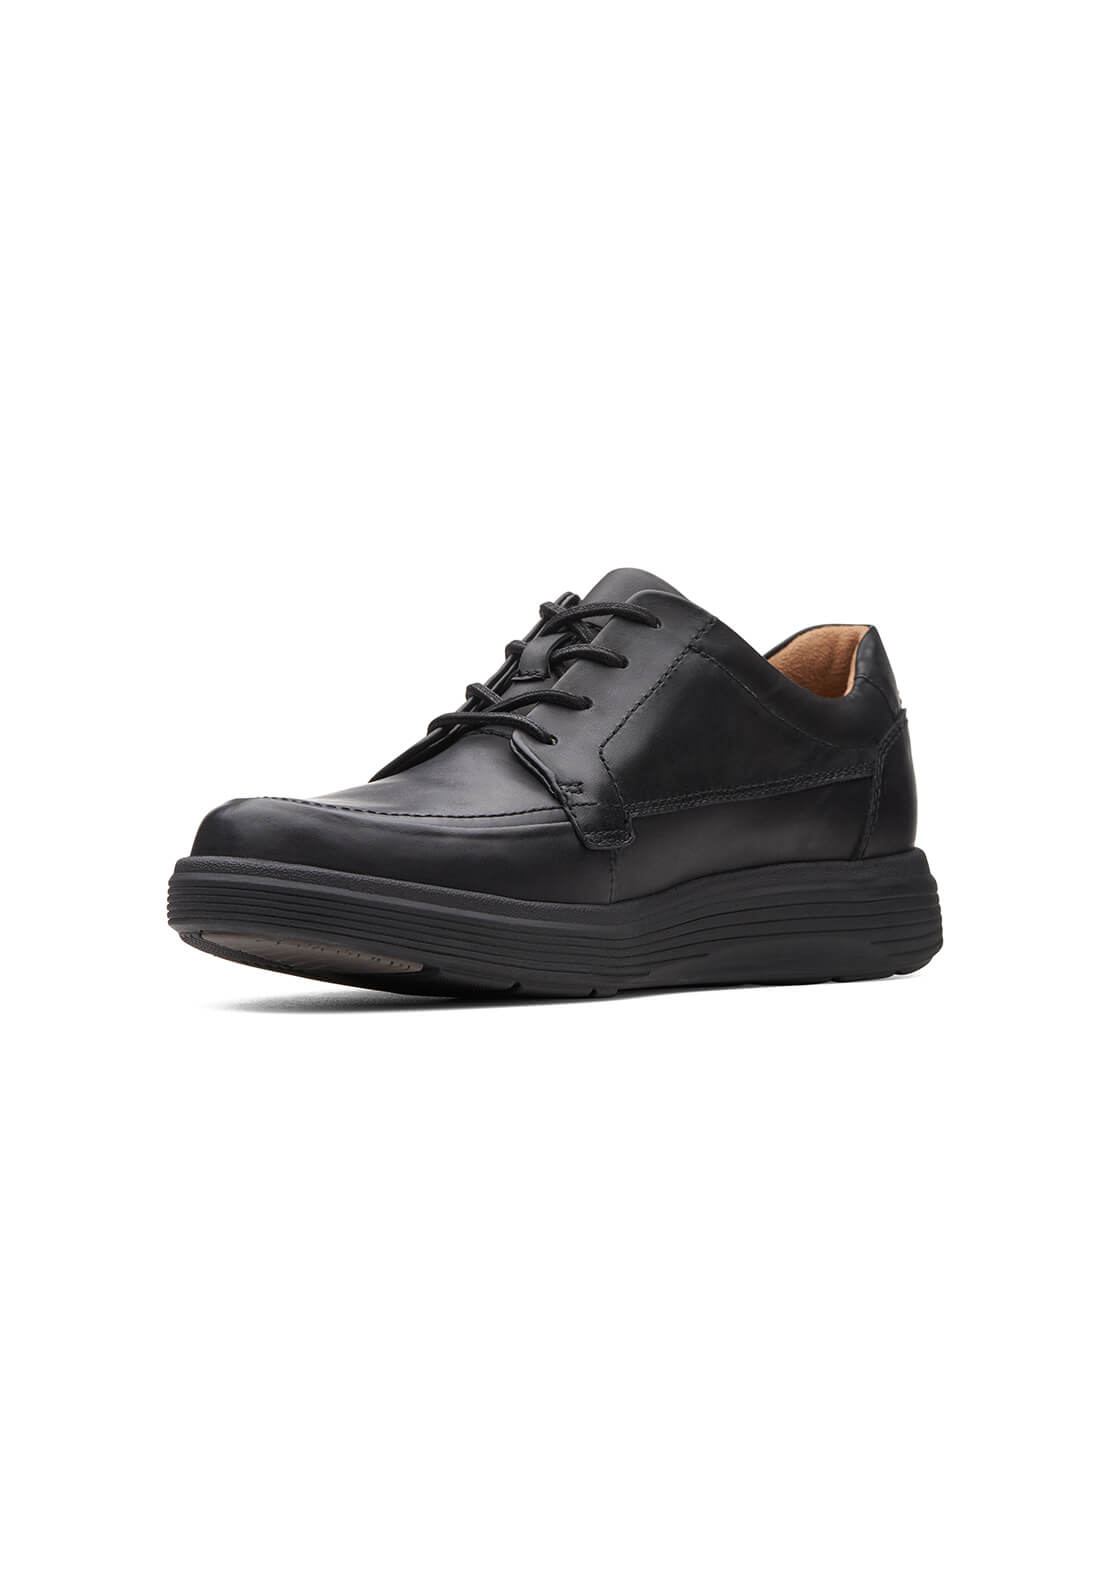 Clarks Un Abode Ease Casual Shoe - Black 2 Shaws Department Stores